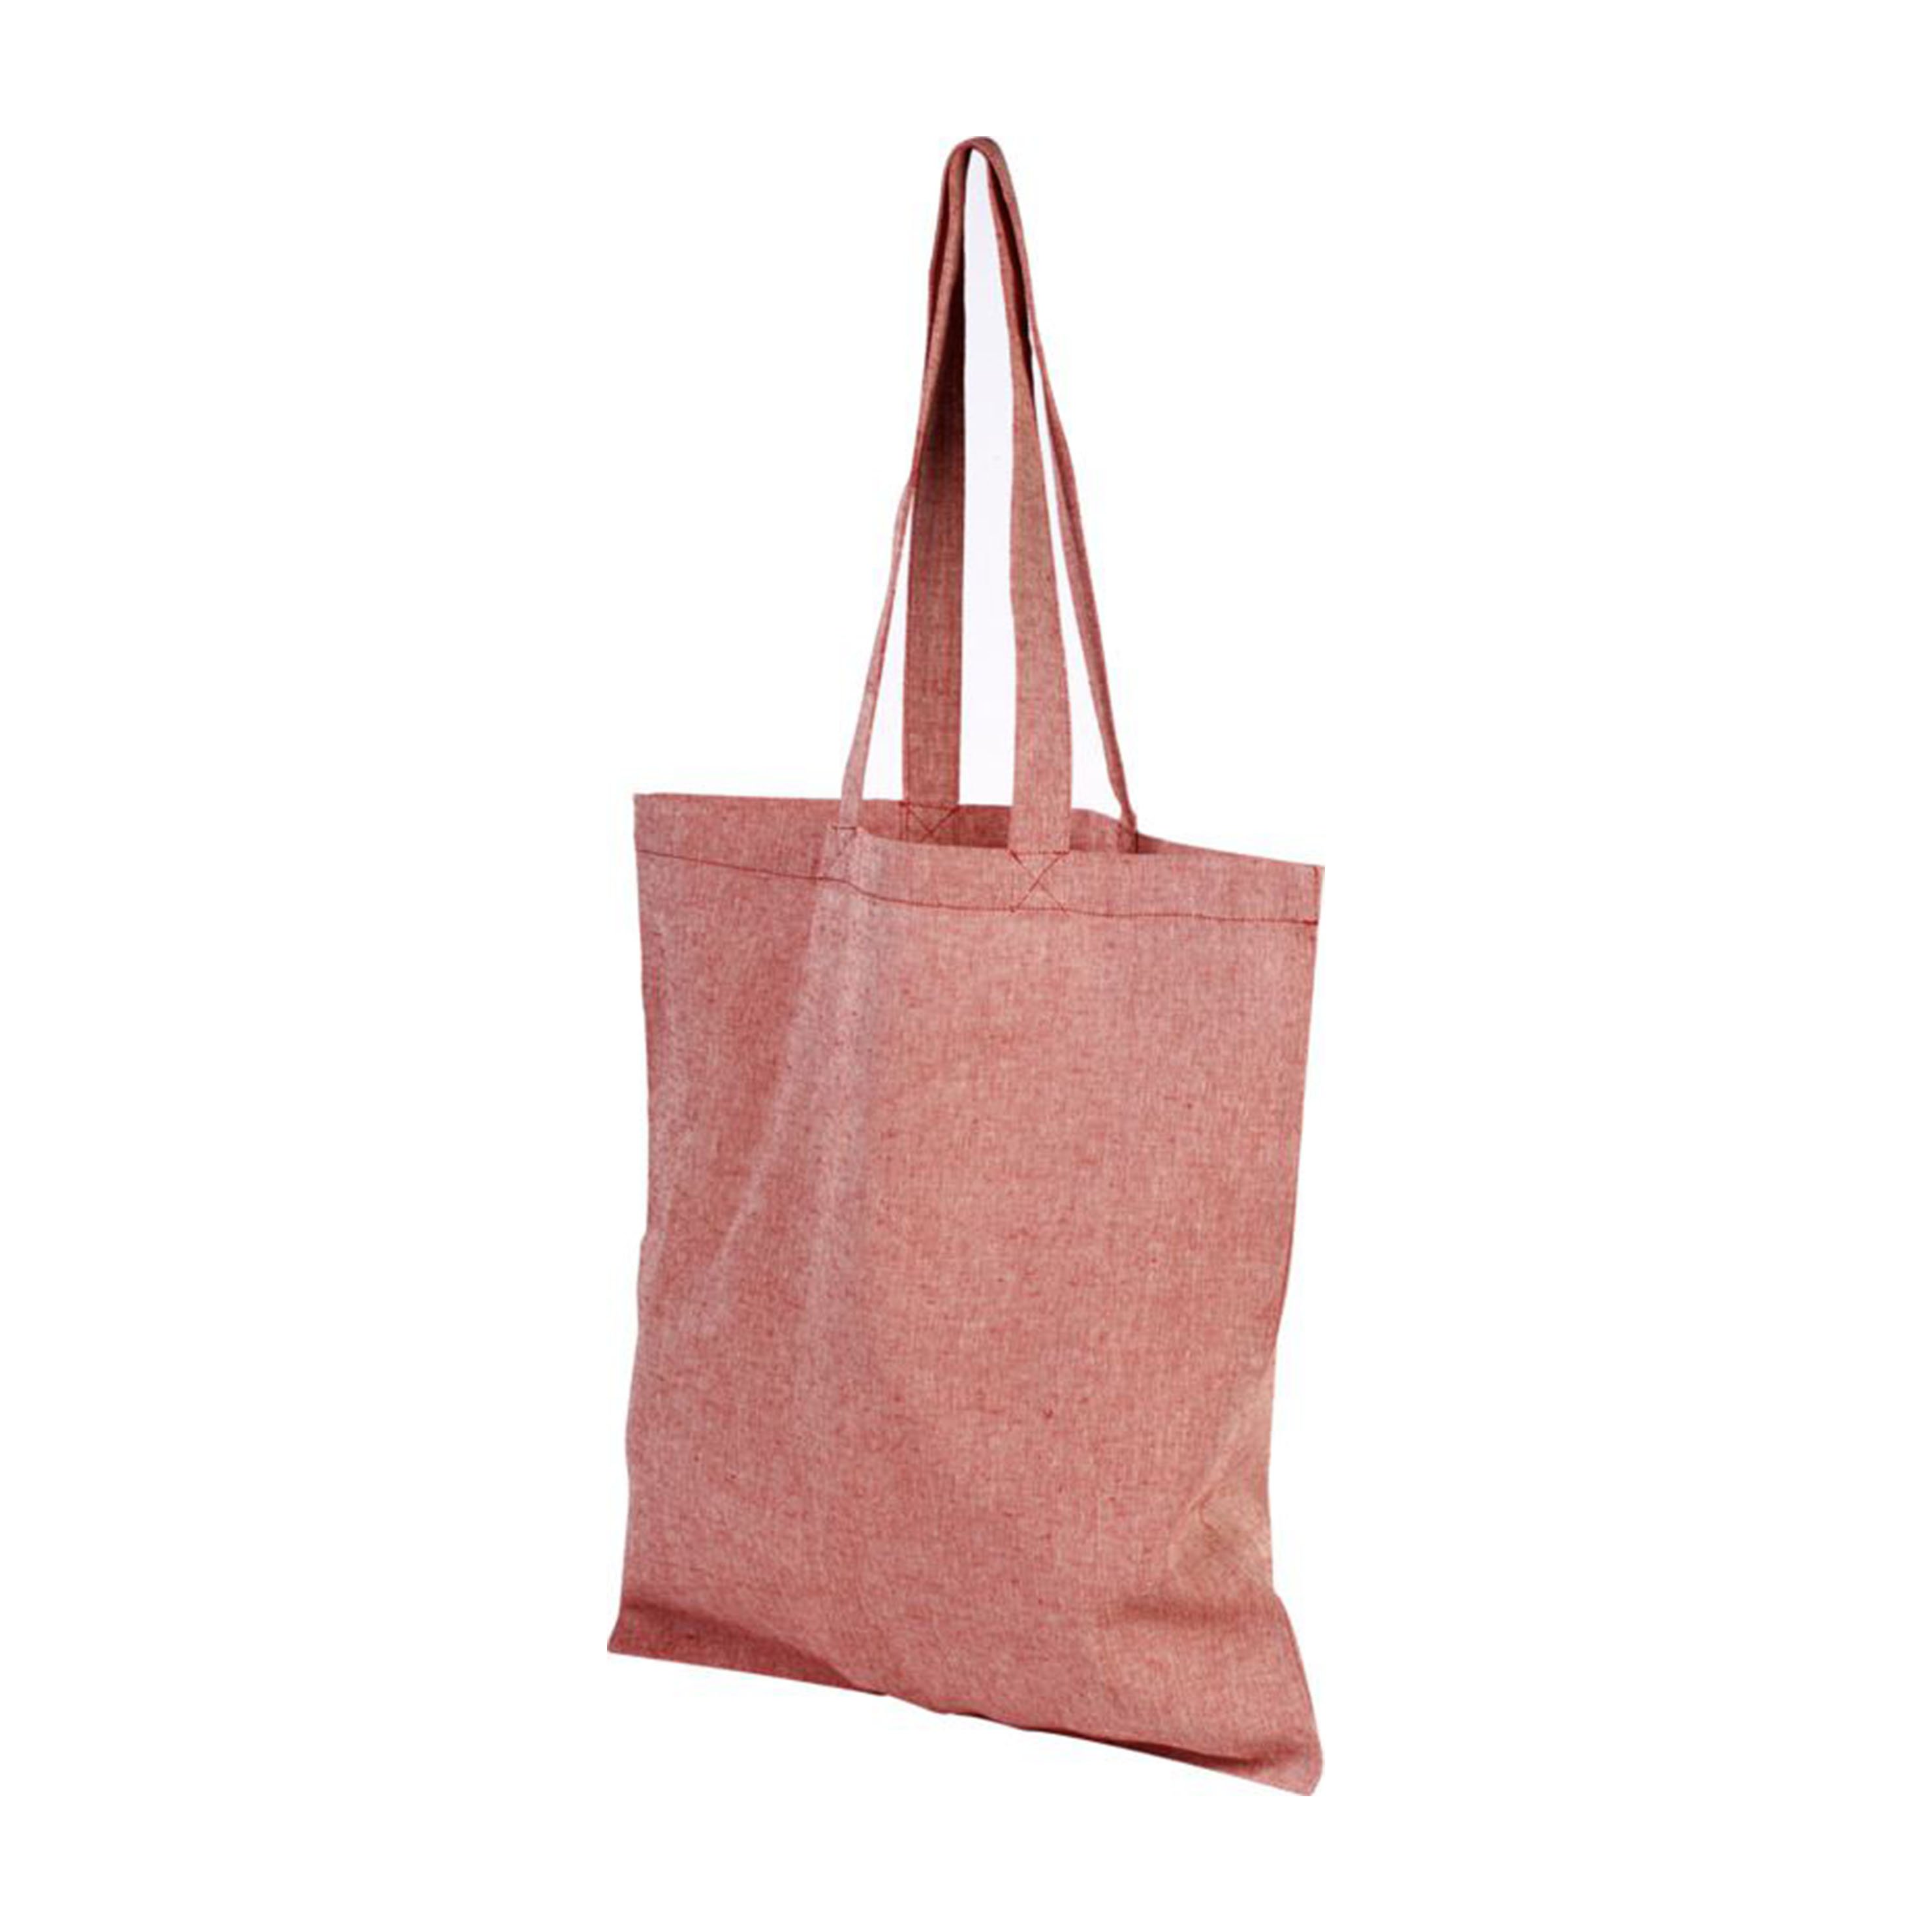 Bullet Pheebs recycled tote bag | Tote bags | Carrying bags